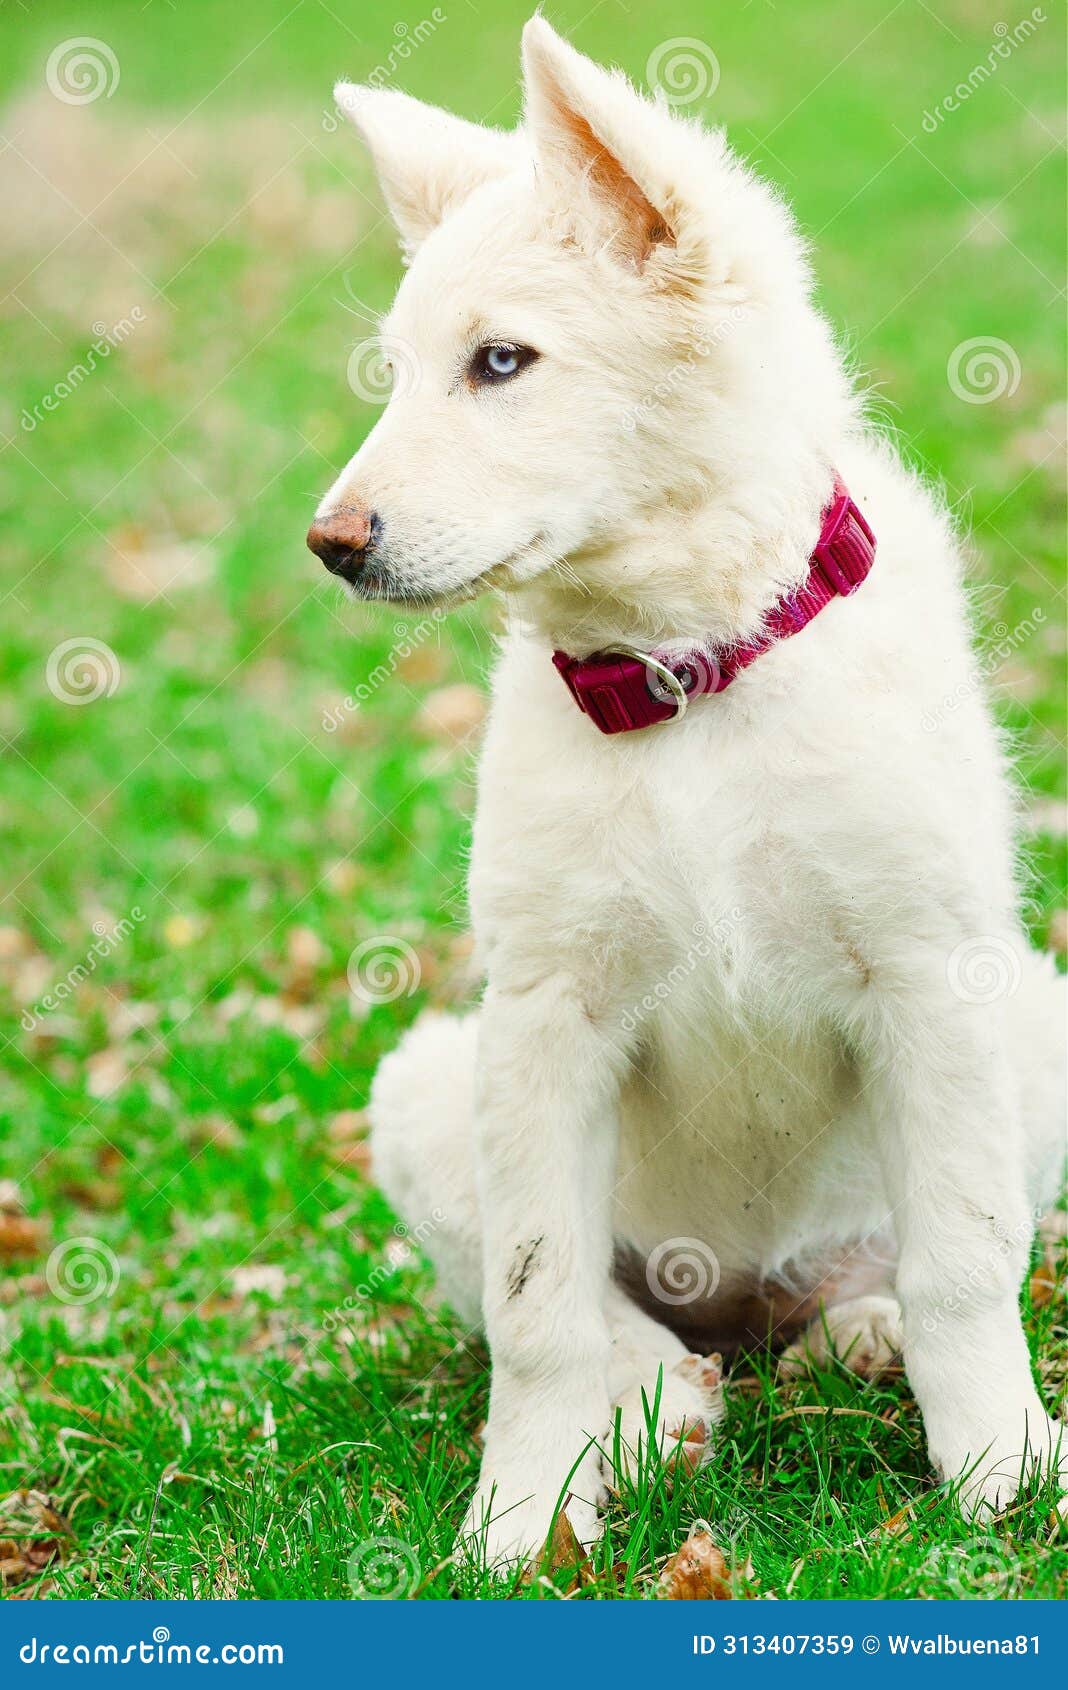 puppy dog white fur blue eye fucsia collar